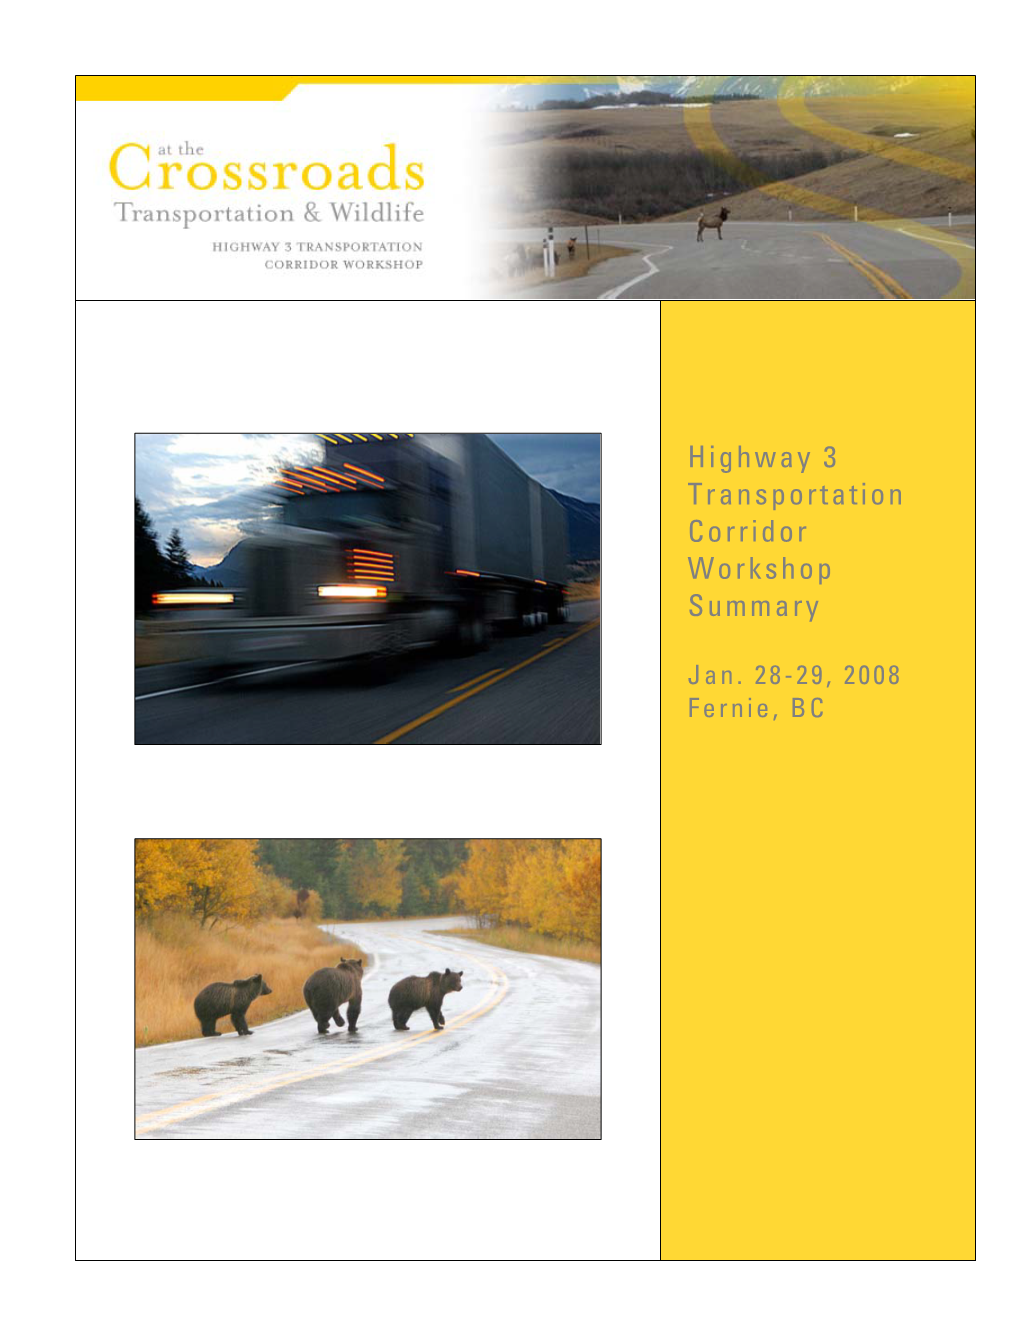 Highway 3 Transportation Corridor Workshop Summary